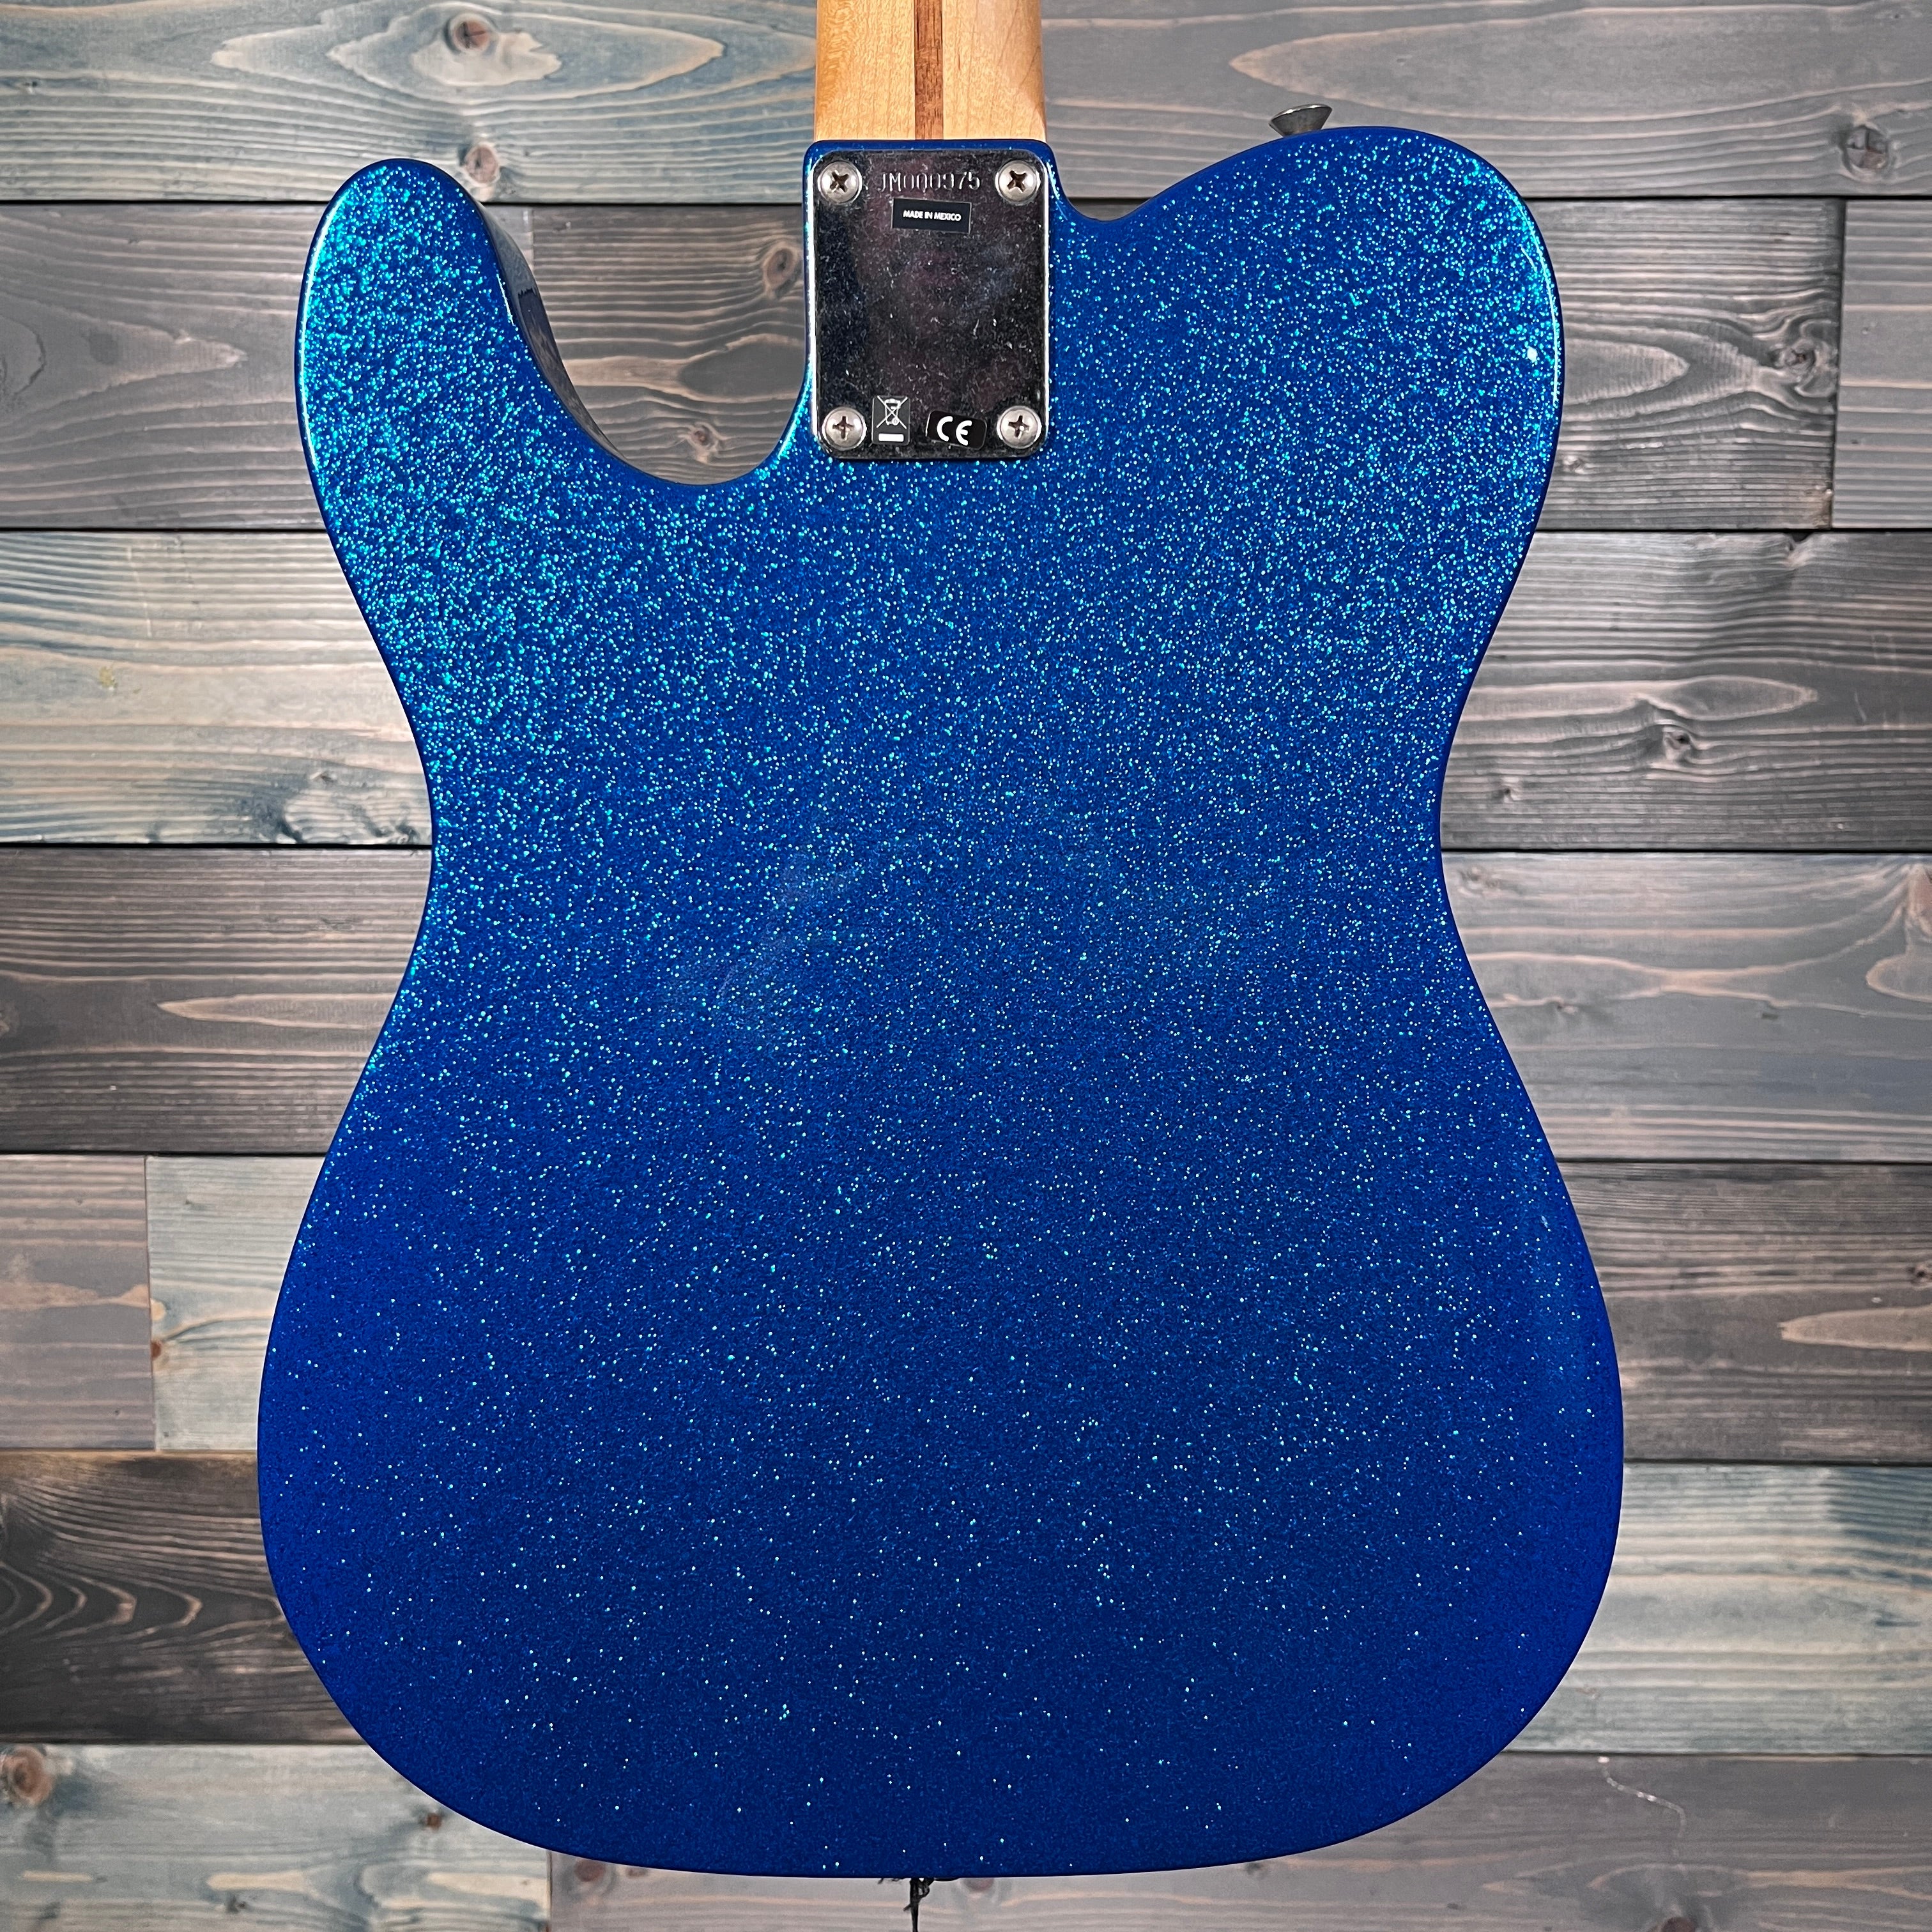 DEMO Fender J Mascis Telecaster, Maple Fingerboard, Bottle Rocket Blue Flake